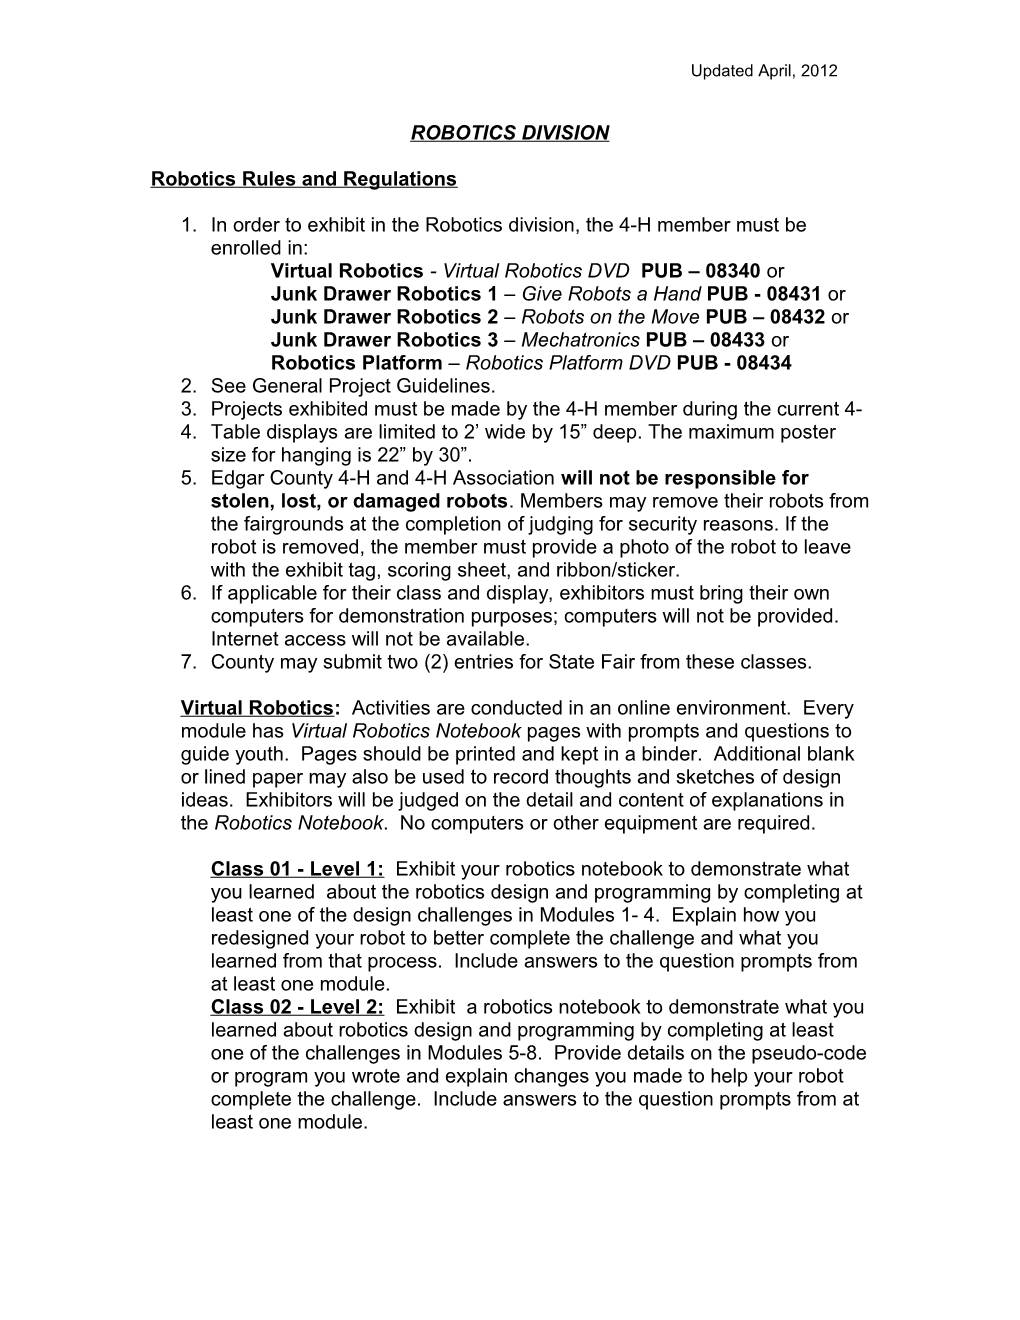 Robotics Rules and Regulations